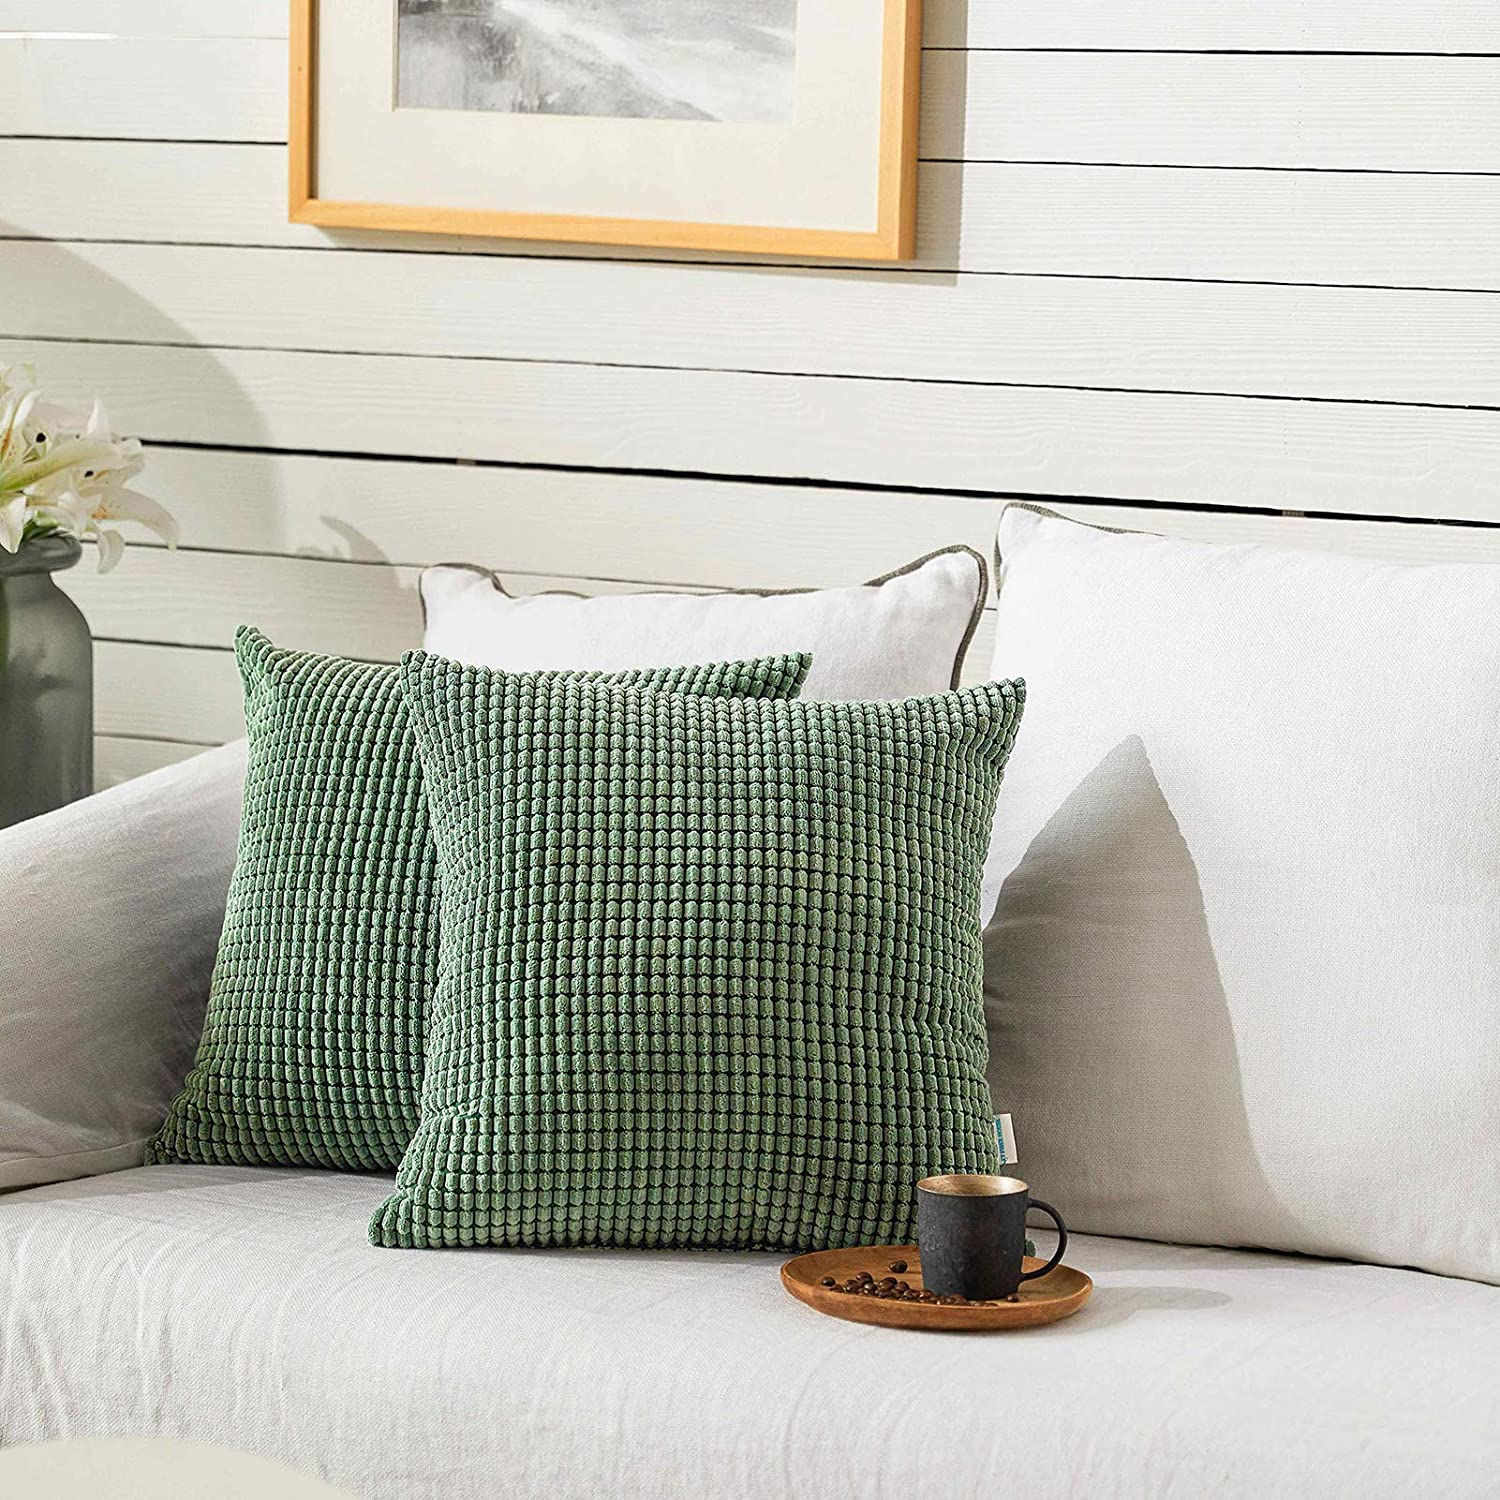 Soft Corduroy Corn Striped Velvet Series Decorative Throw Pillow, 18 x  18, Orange, 2 Pack